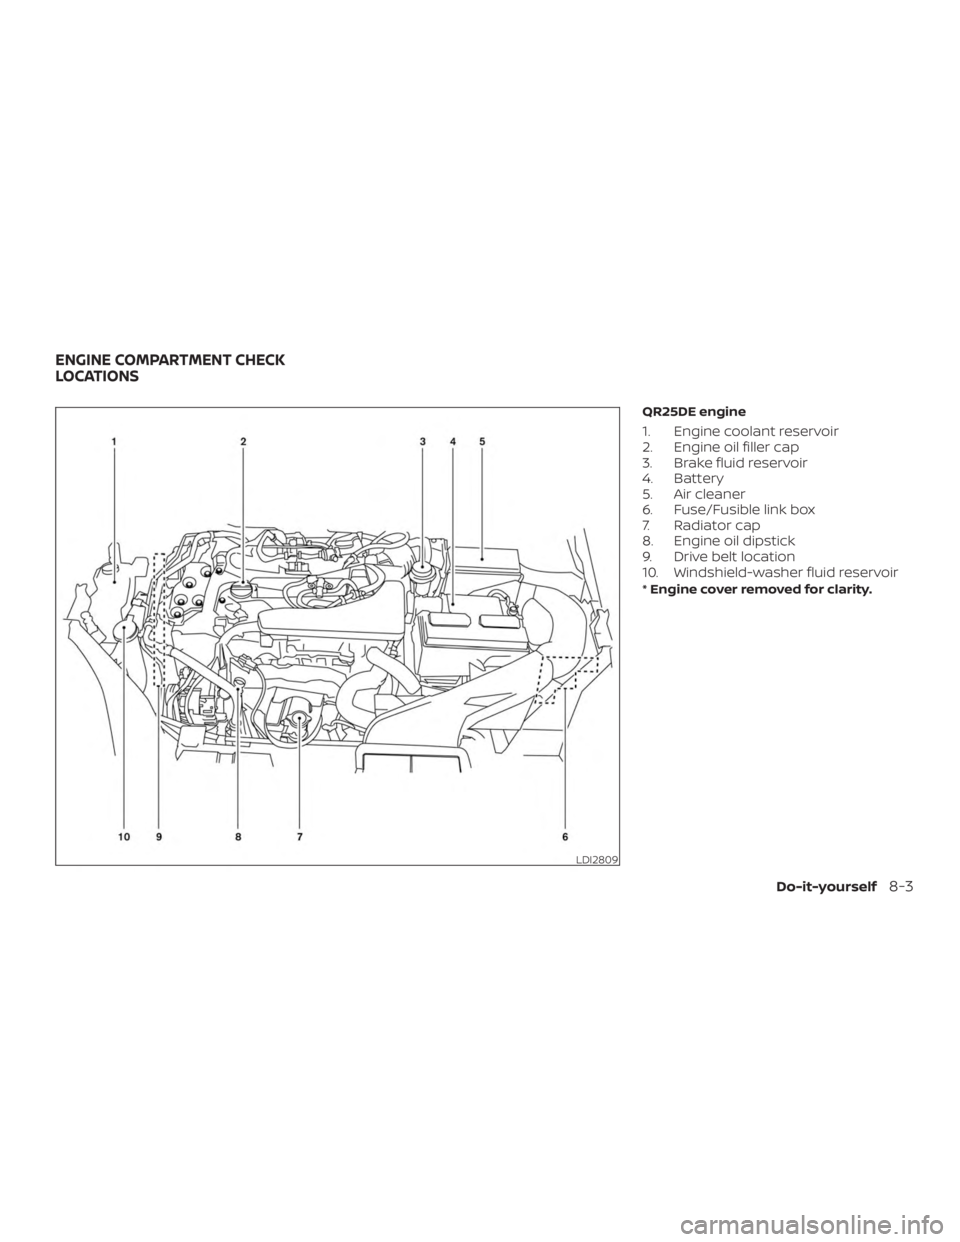 NISSAN ROGUE 2018  Owner´s Manual QR25DE engine
1. Engine coolant reservoir
2. Engine oil filler cap
3. Brake fluid reservoir
4. Battery
5. Air cleaner
6. Fuse/Fusible link box
7. Radiator cap
8. Engine oil dipstick
9. Drive belt loca